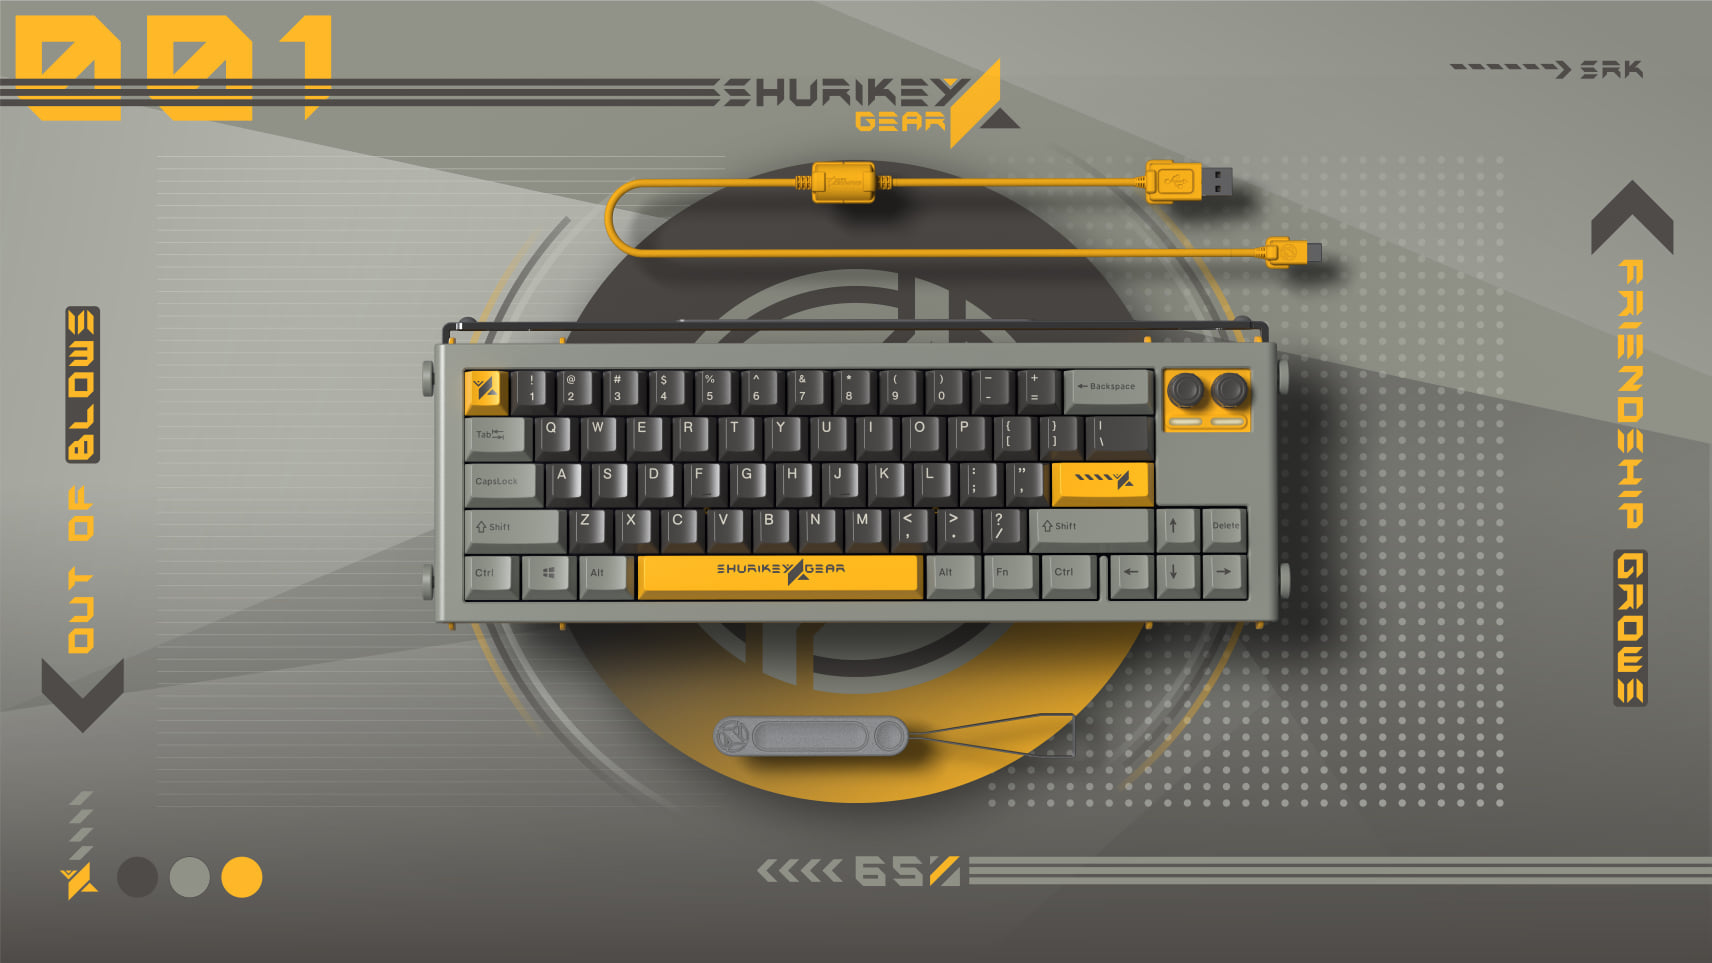 Shurikey Hanzo 001 Bluetooth 65% Mechanical Keyboard